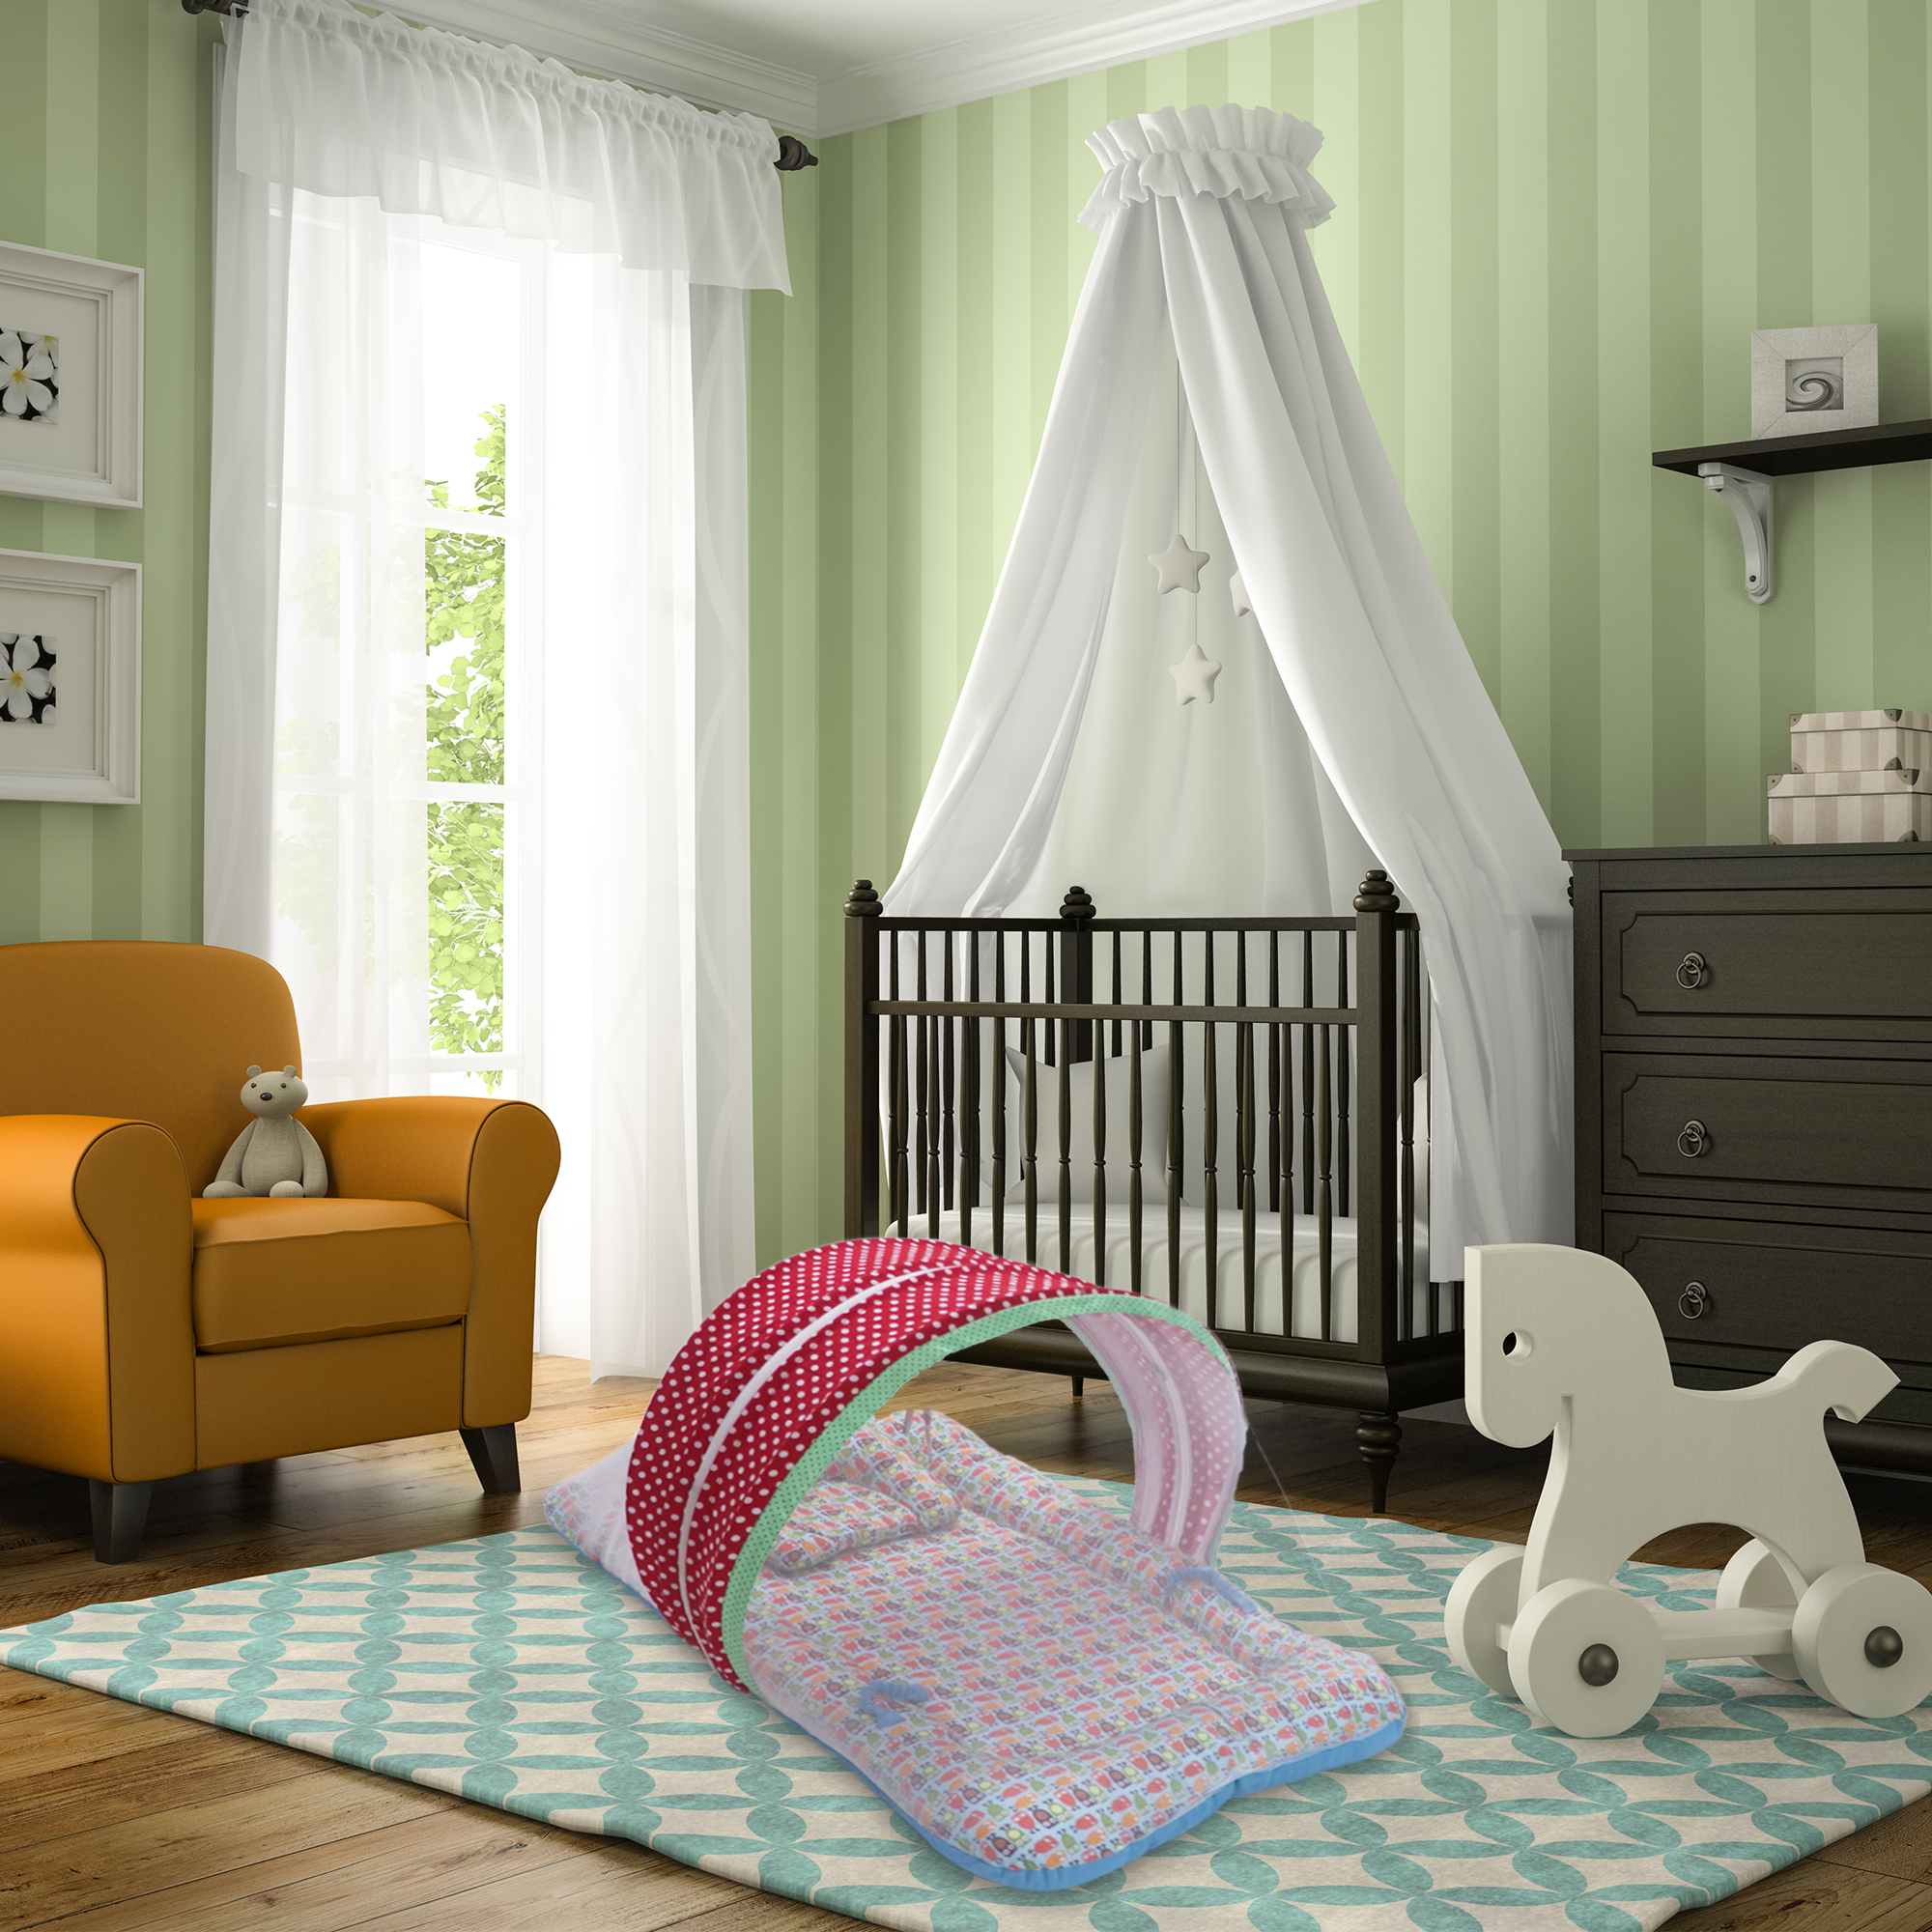 Happy Owls -  Kradyl Kroft Bassinet Style Mosquito Net Bedding for Infants